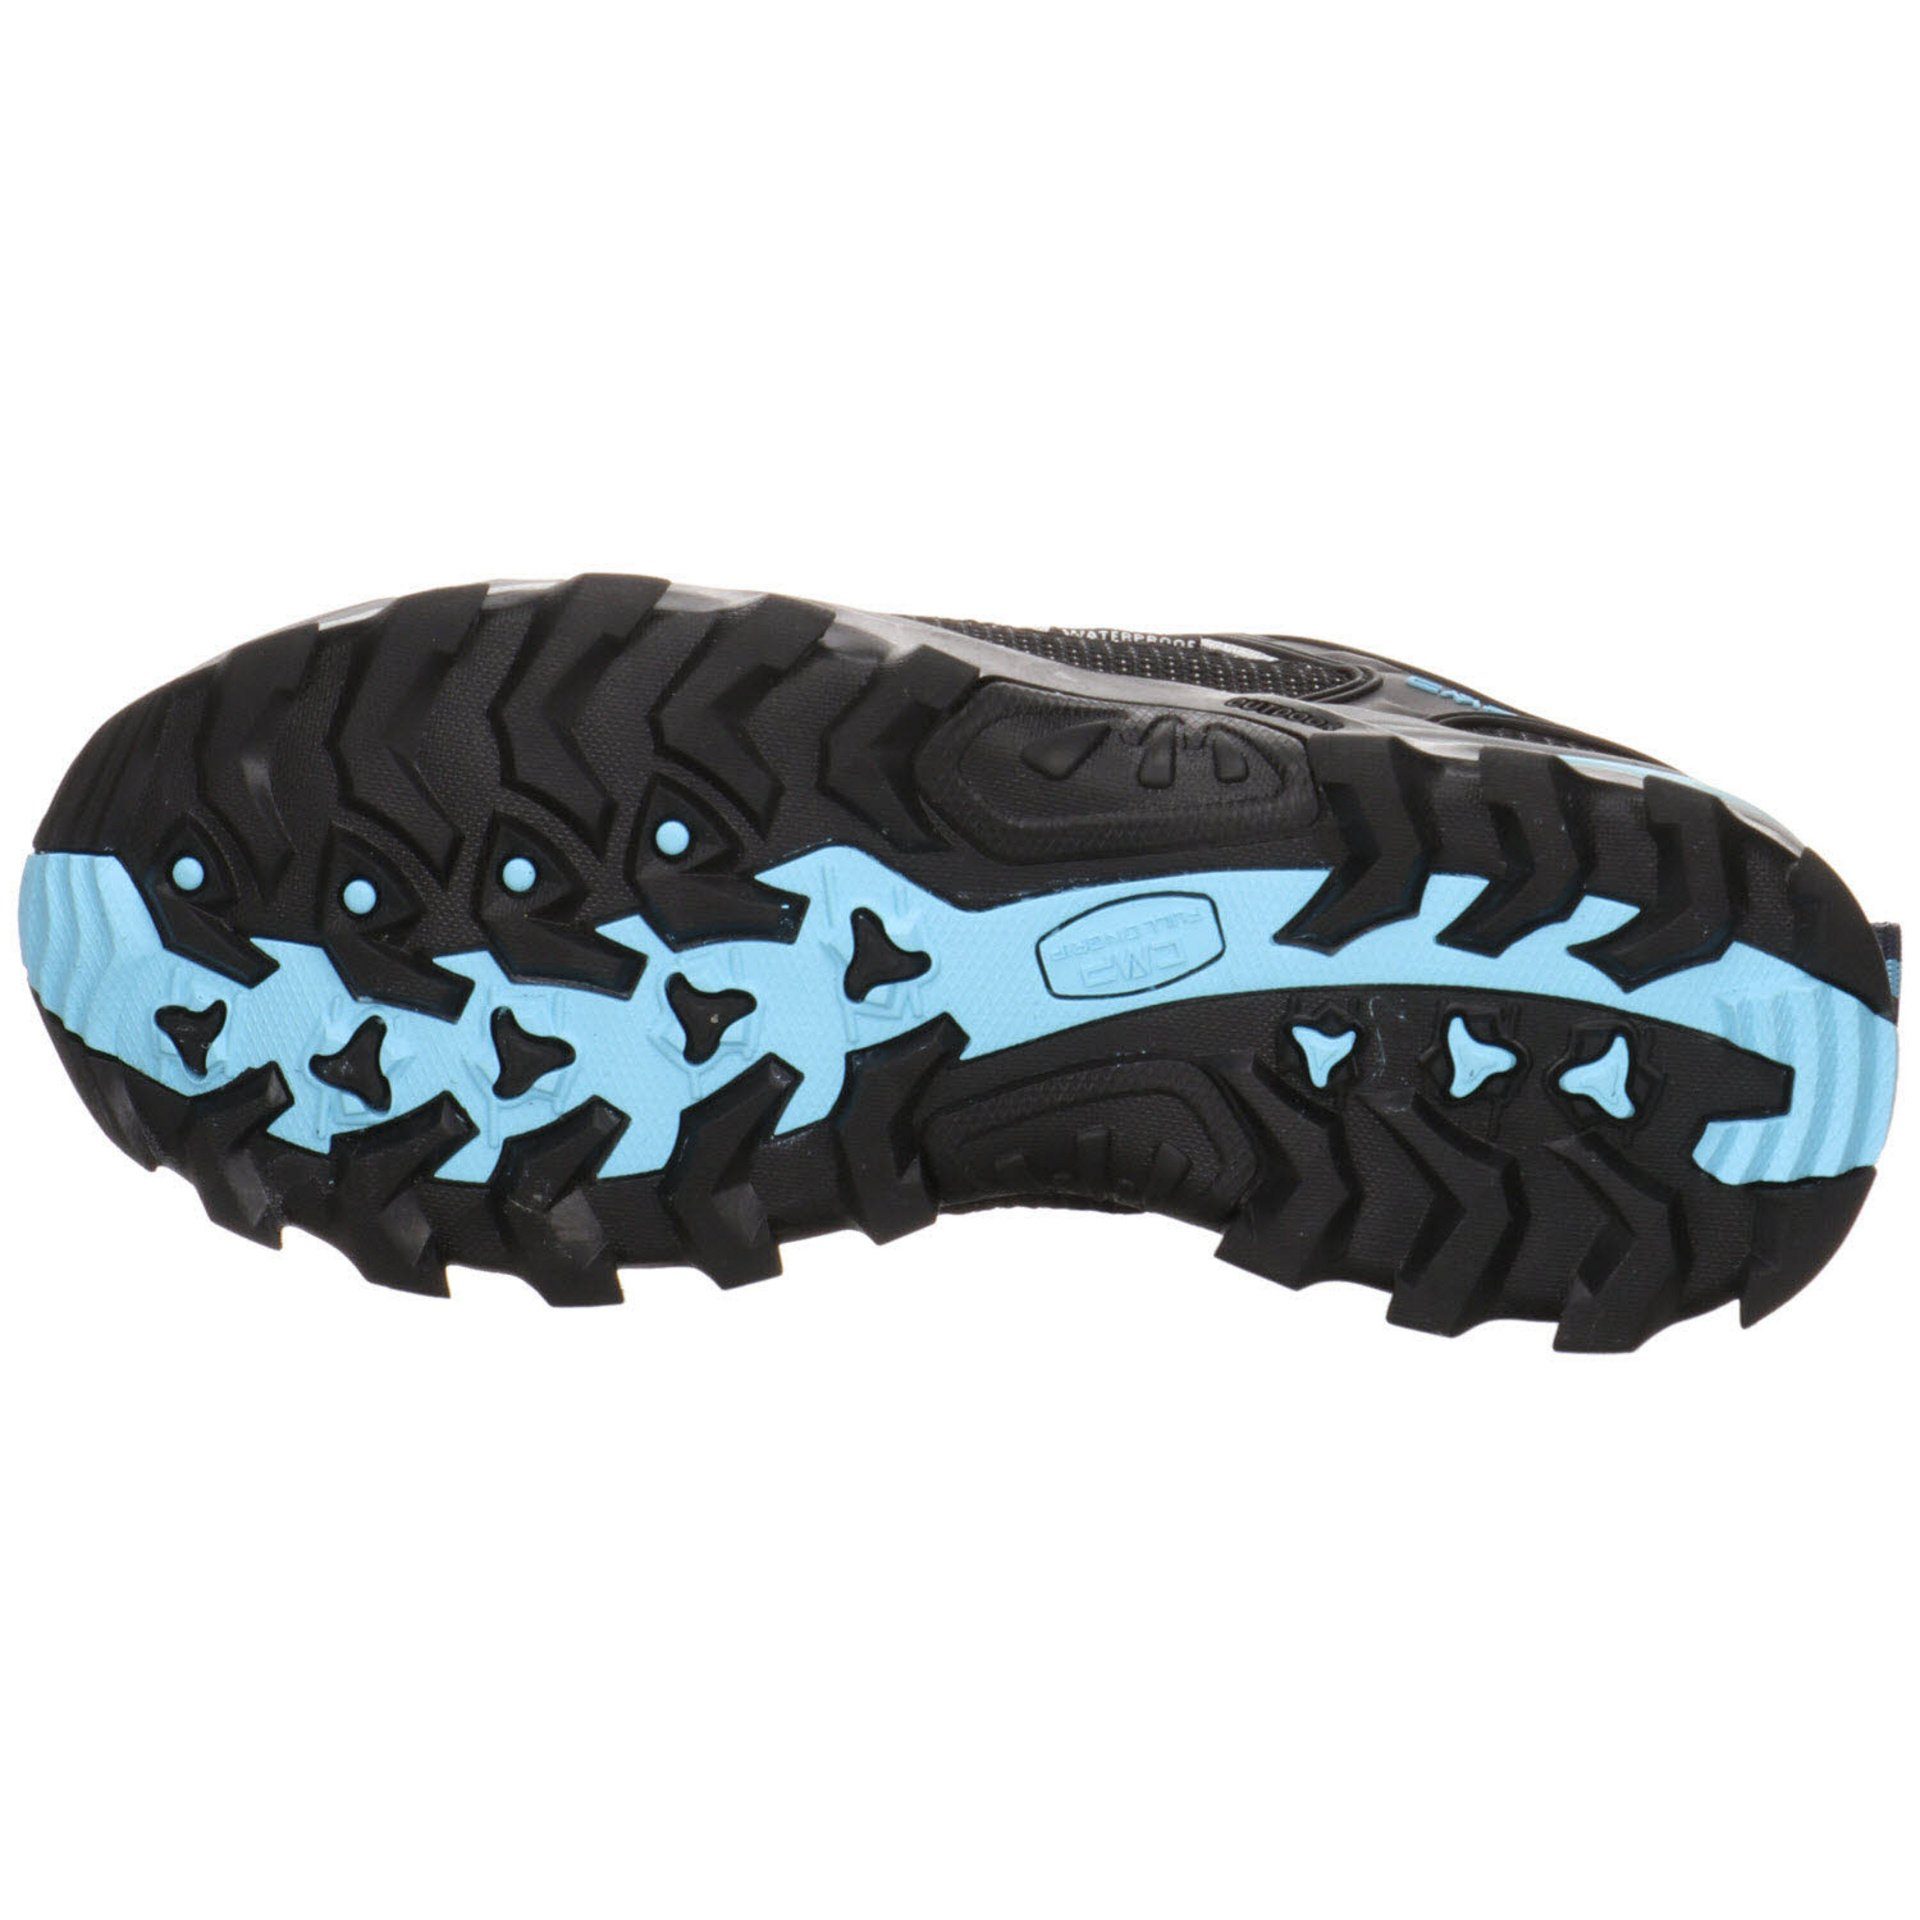 CMP Damen Schuhe Outdoorschuh kombi-schwarz blau Synthetikkombination Low Outdoorschuh Rigel Outdoor